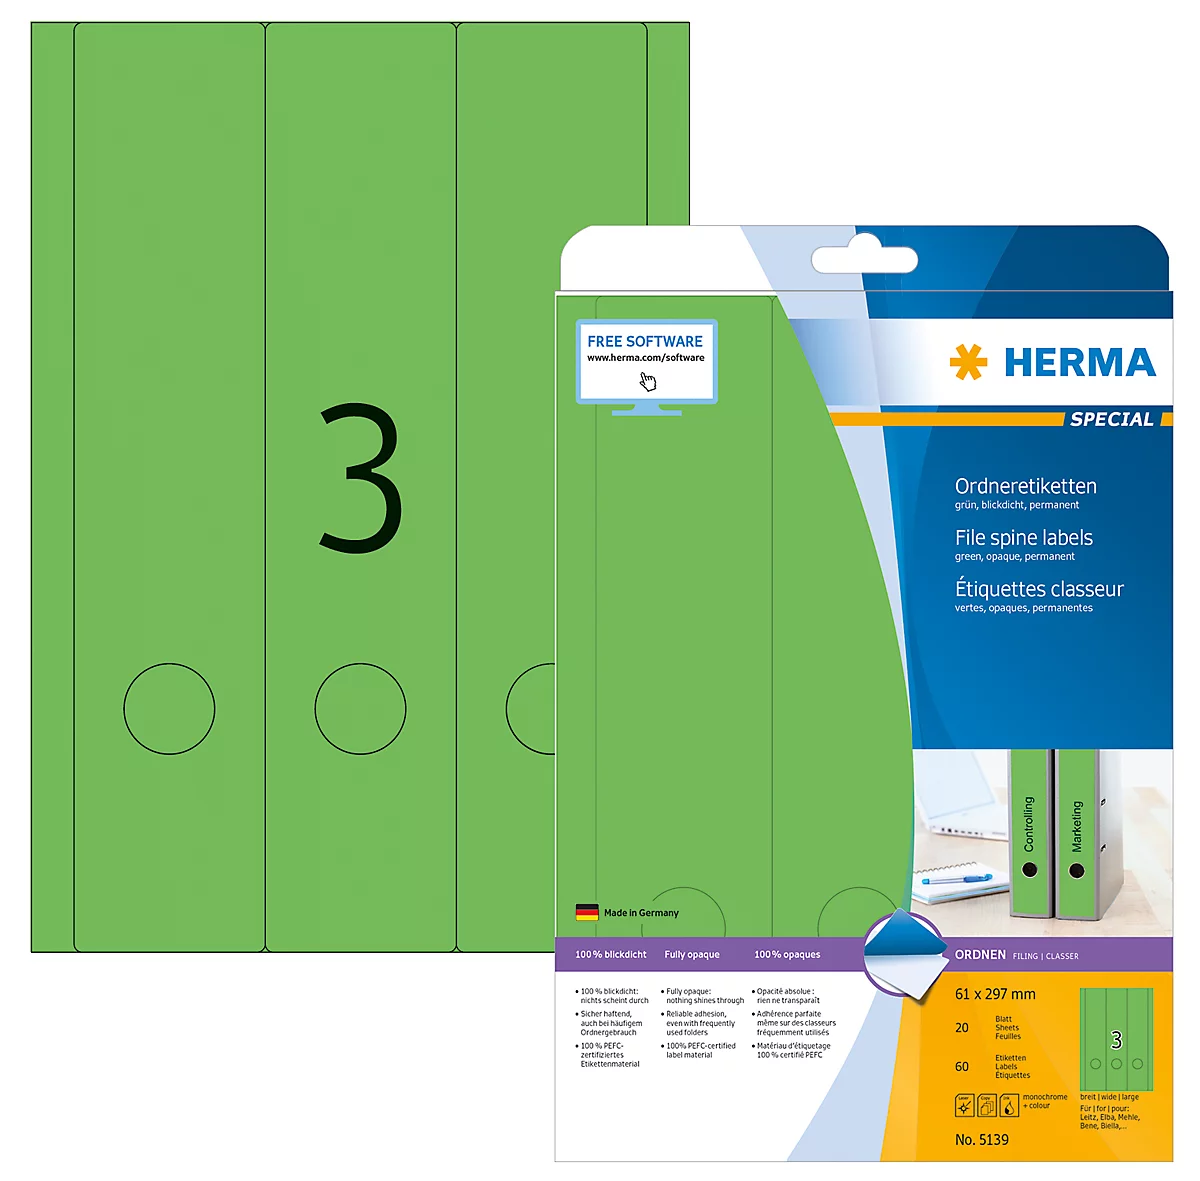 Herma Ordneretiketten A4, 297 x 61 mm, permanent haftend/bedruckbar, 60 Stück, grün